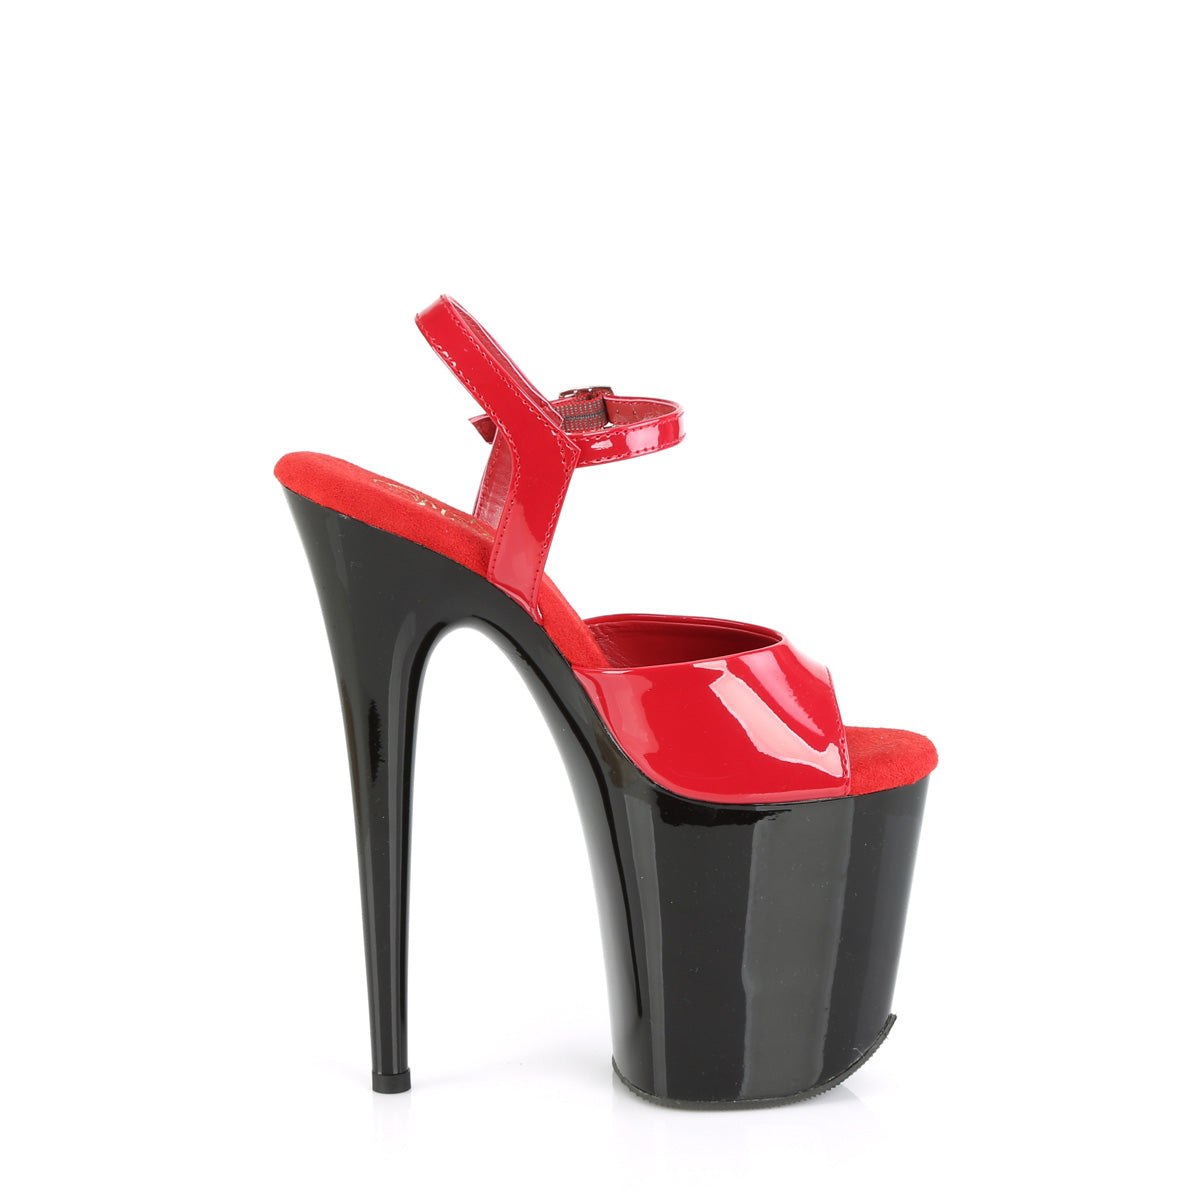 FLAMINGO-809 Black & Red Ankle Peep Toe High Heel